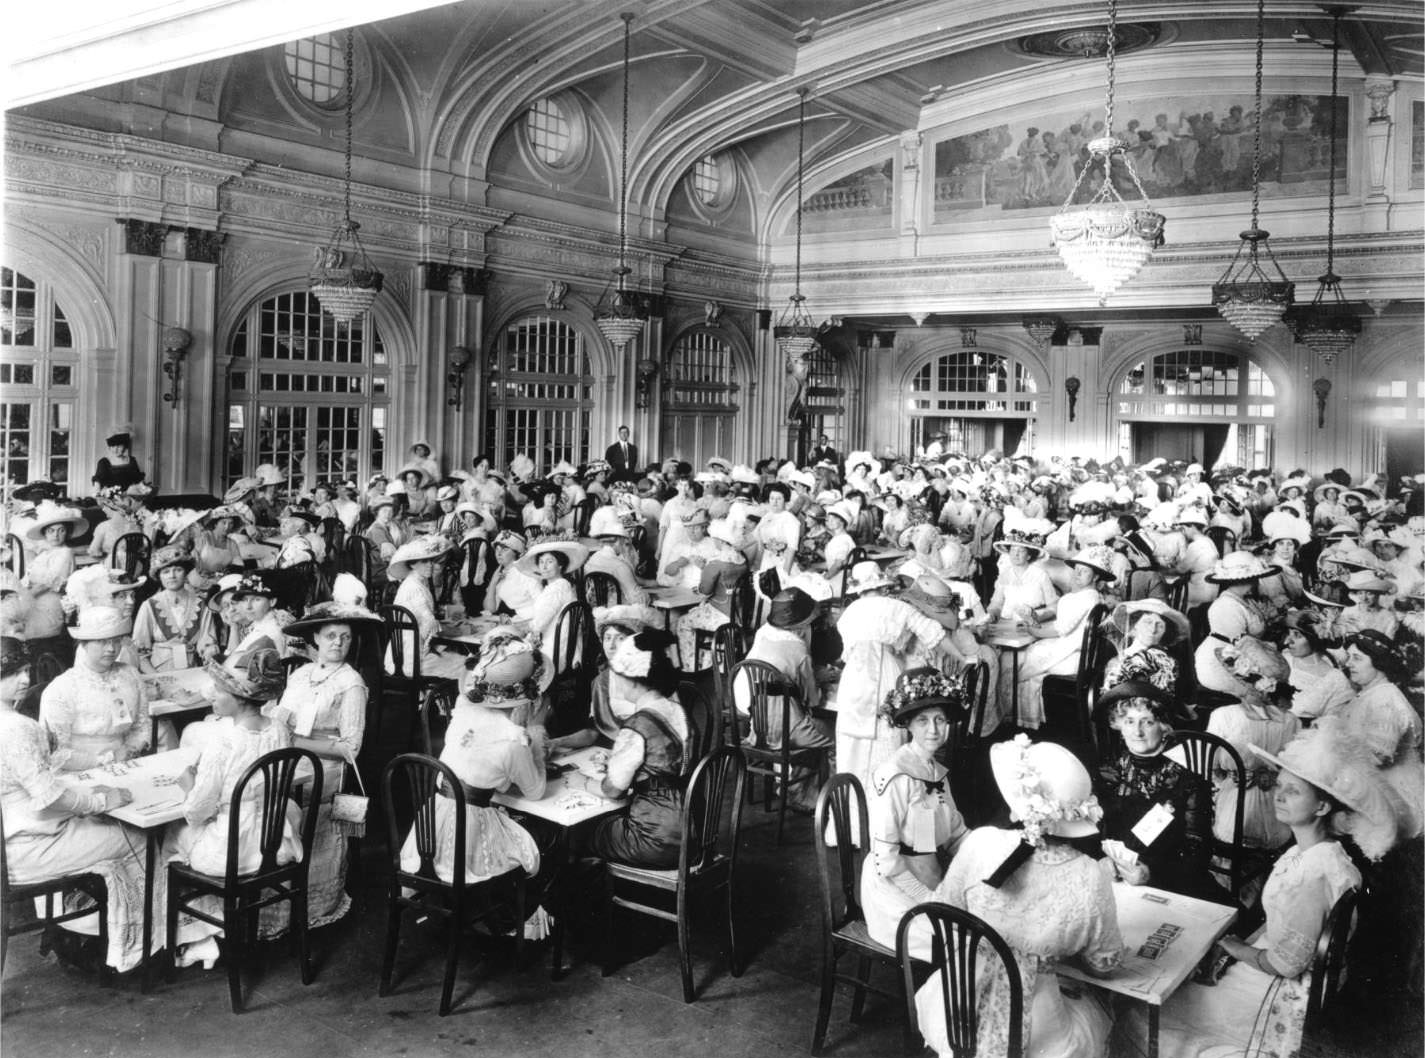 Large ladies' bridge party in the ballroom of the Rice Hotel, Houston, 1930s.